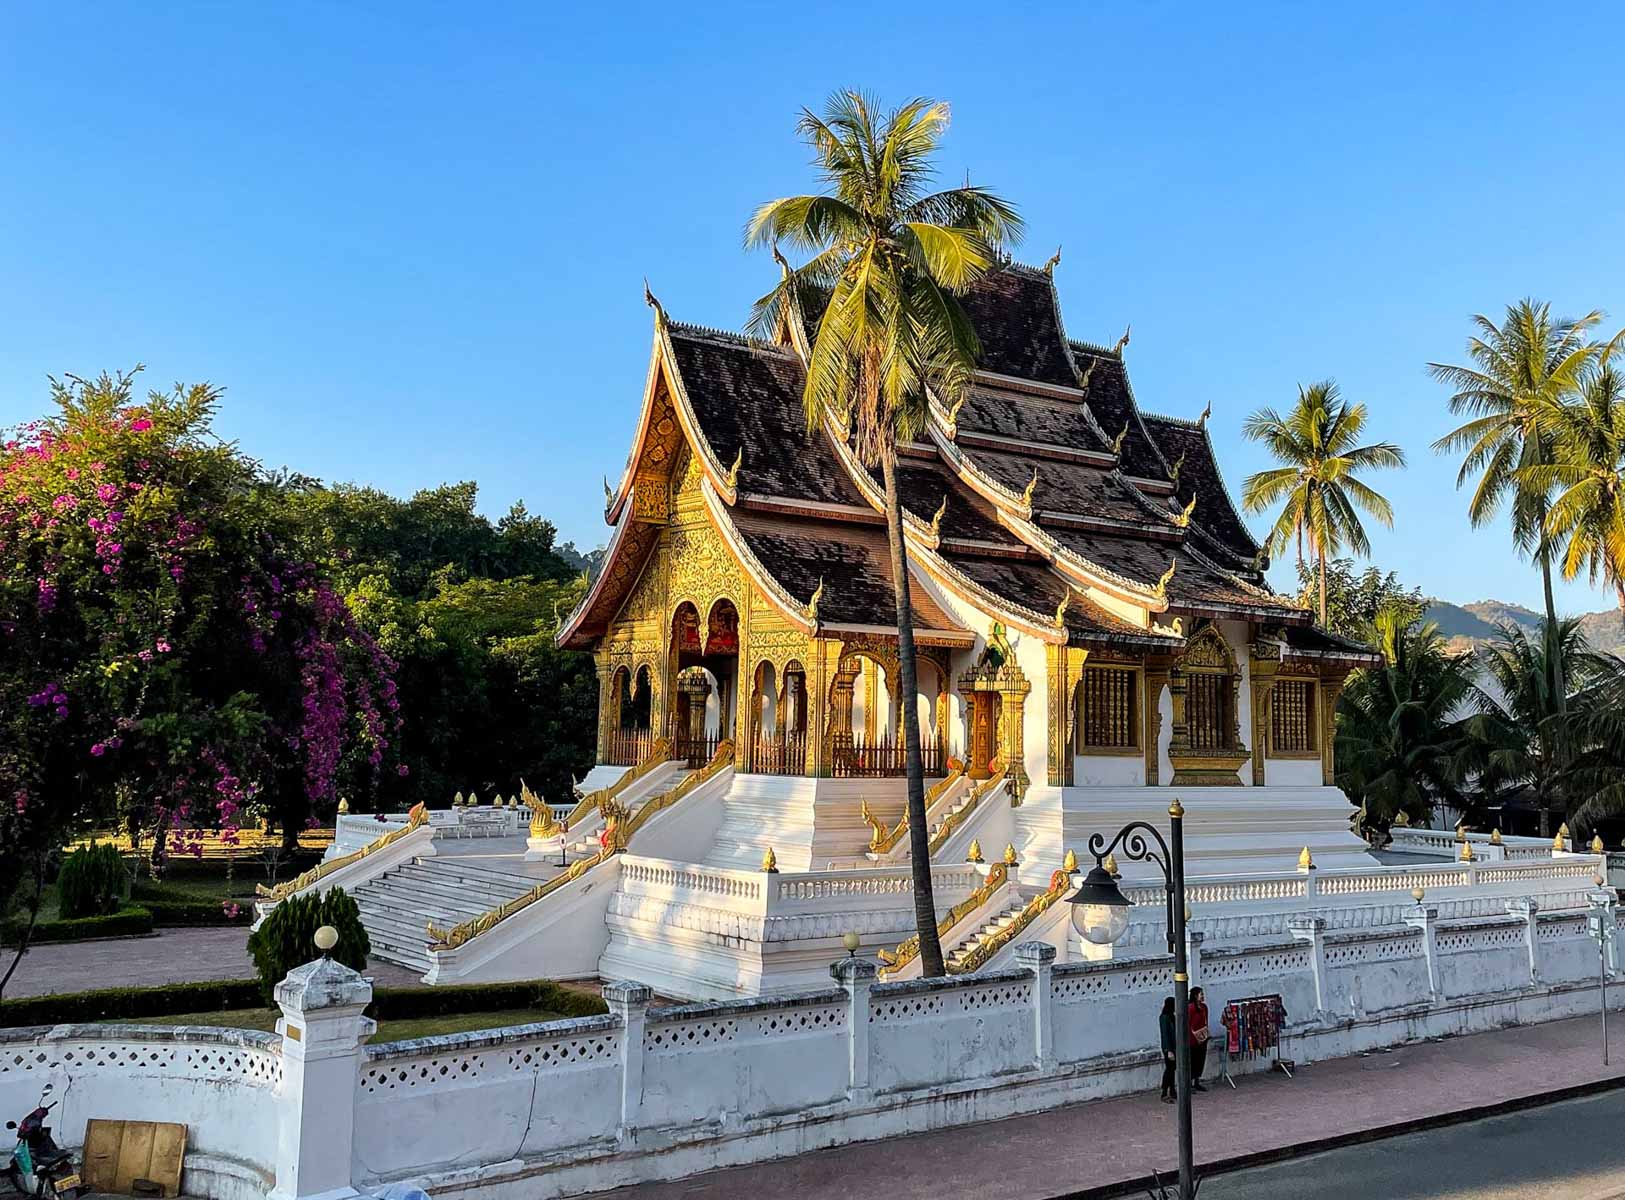 /fm/Files//Pictures/Ido Uploads(1)/Asia/Laos/Luang Prabang/Luang Prabang - Main Temple.jpg